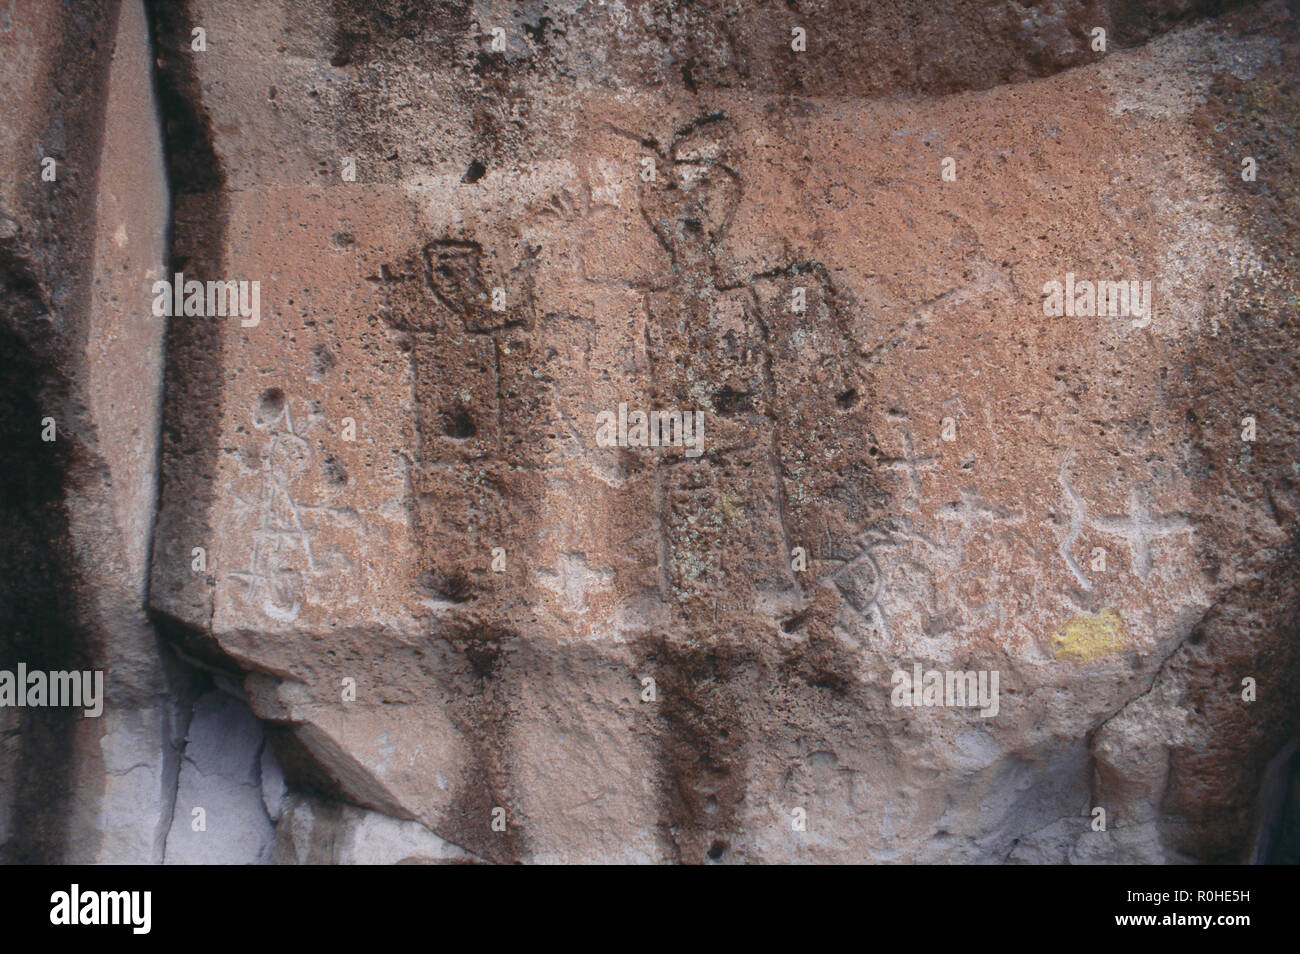 Native American petroglyphs of human figures, Tsankawi mesa cliff-dwellings, New Mexico. Photograph Stock Photo